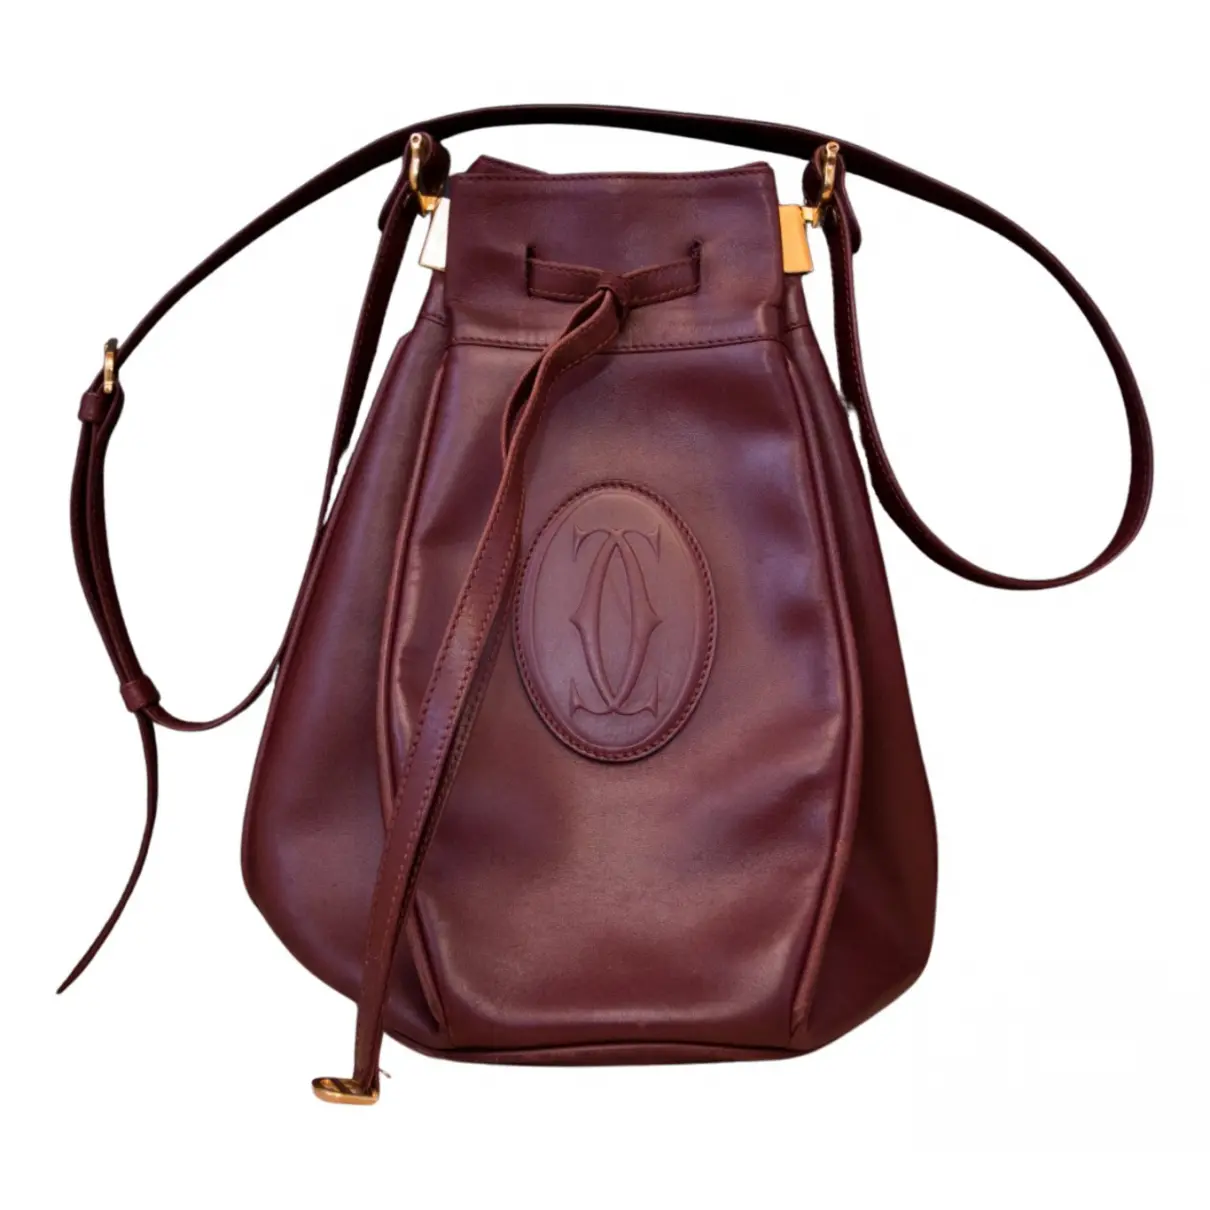 Seau leather handbag Cartier